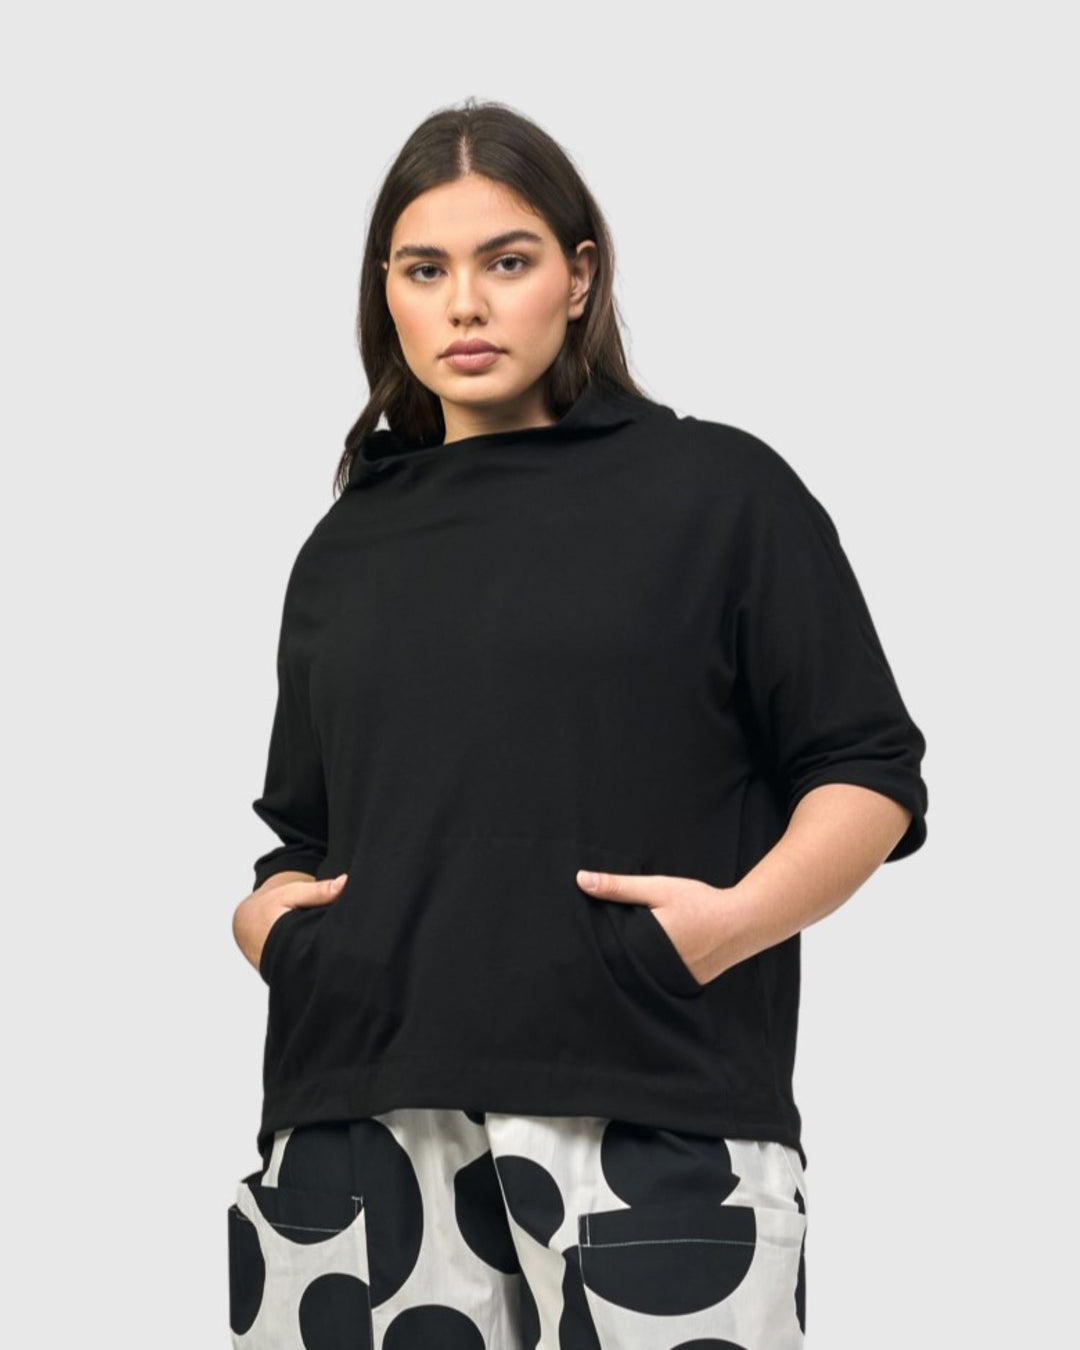 Urban Wanderer Sweatshirt, Black